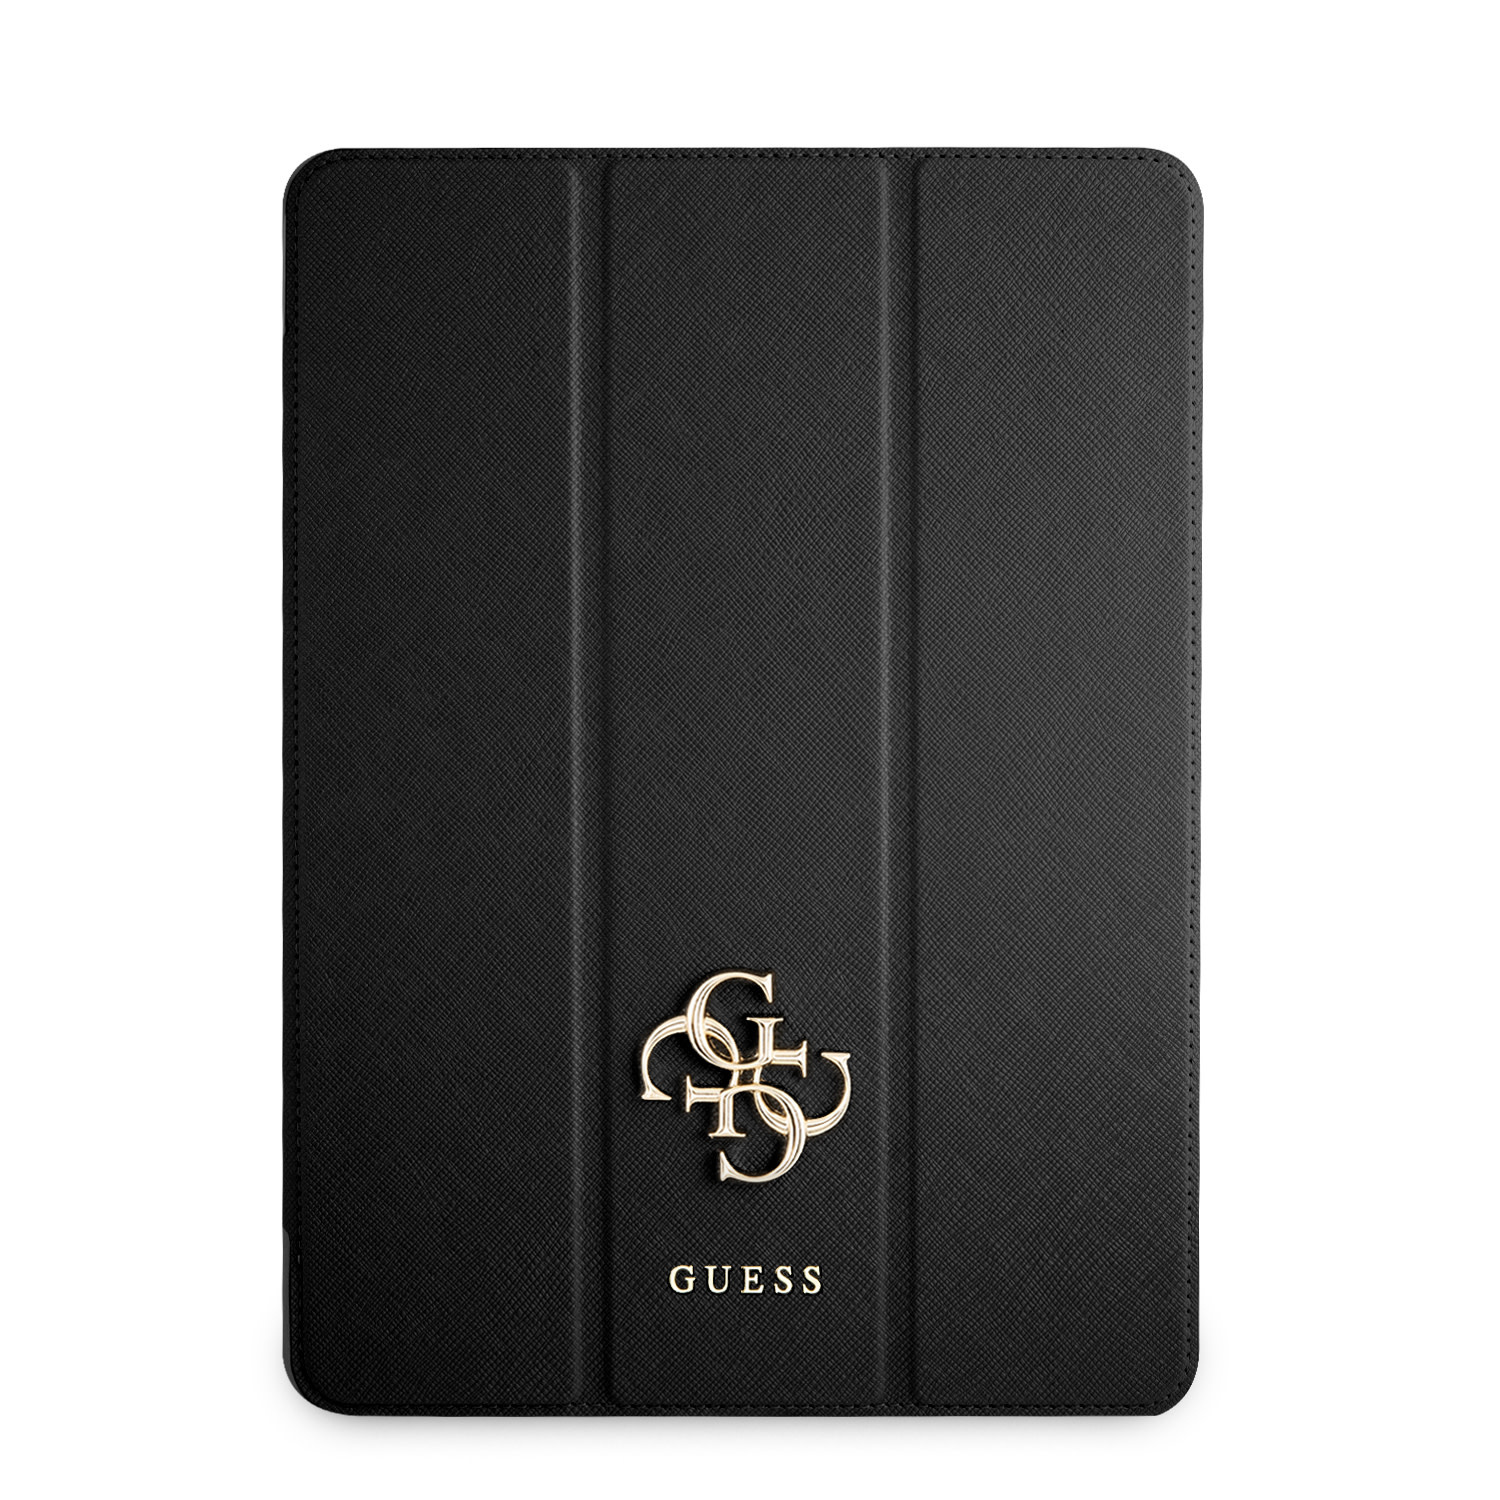 Guess Folio iPad Pro 12.9 colos (2021) könyvtok - 